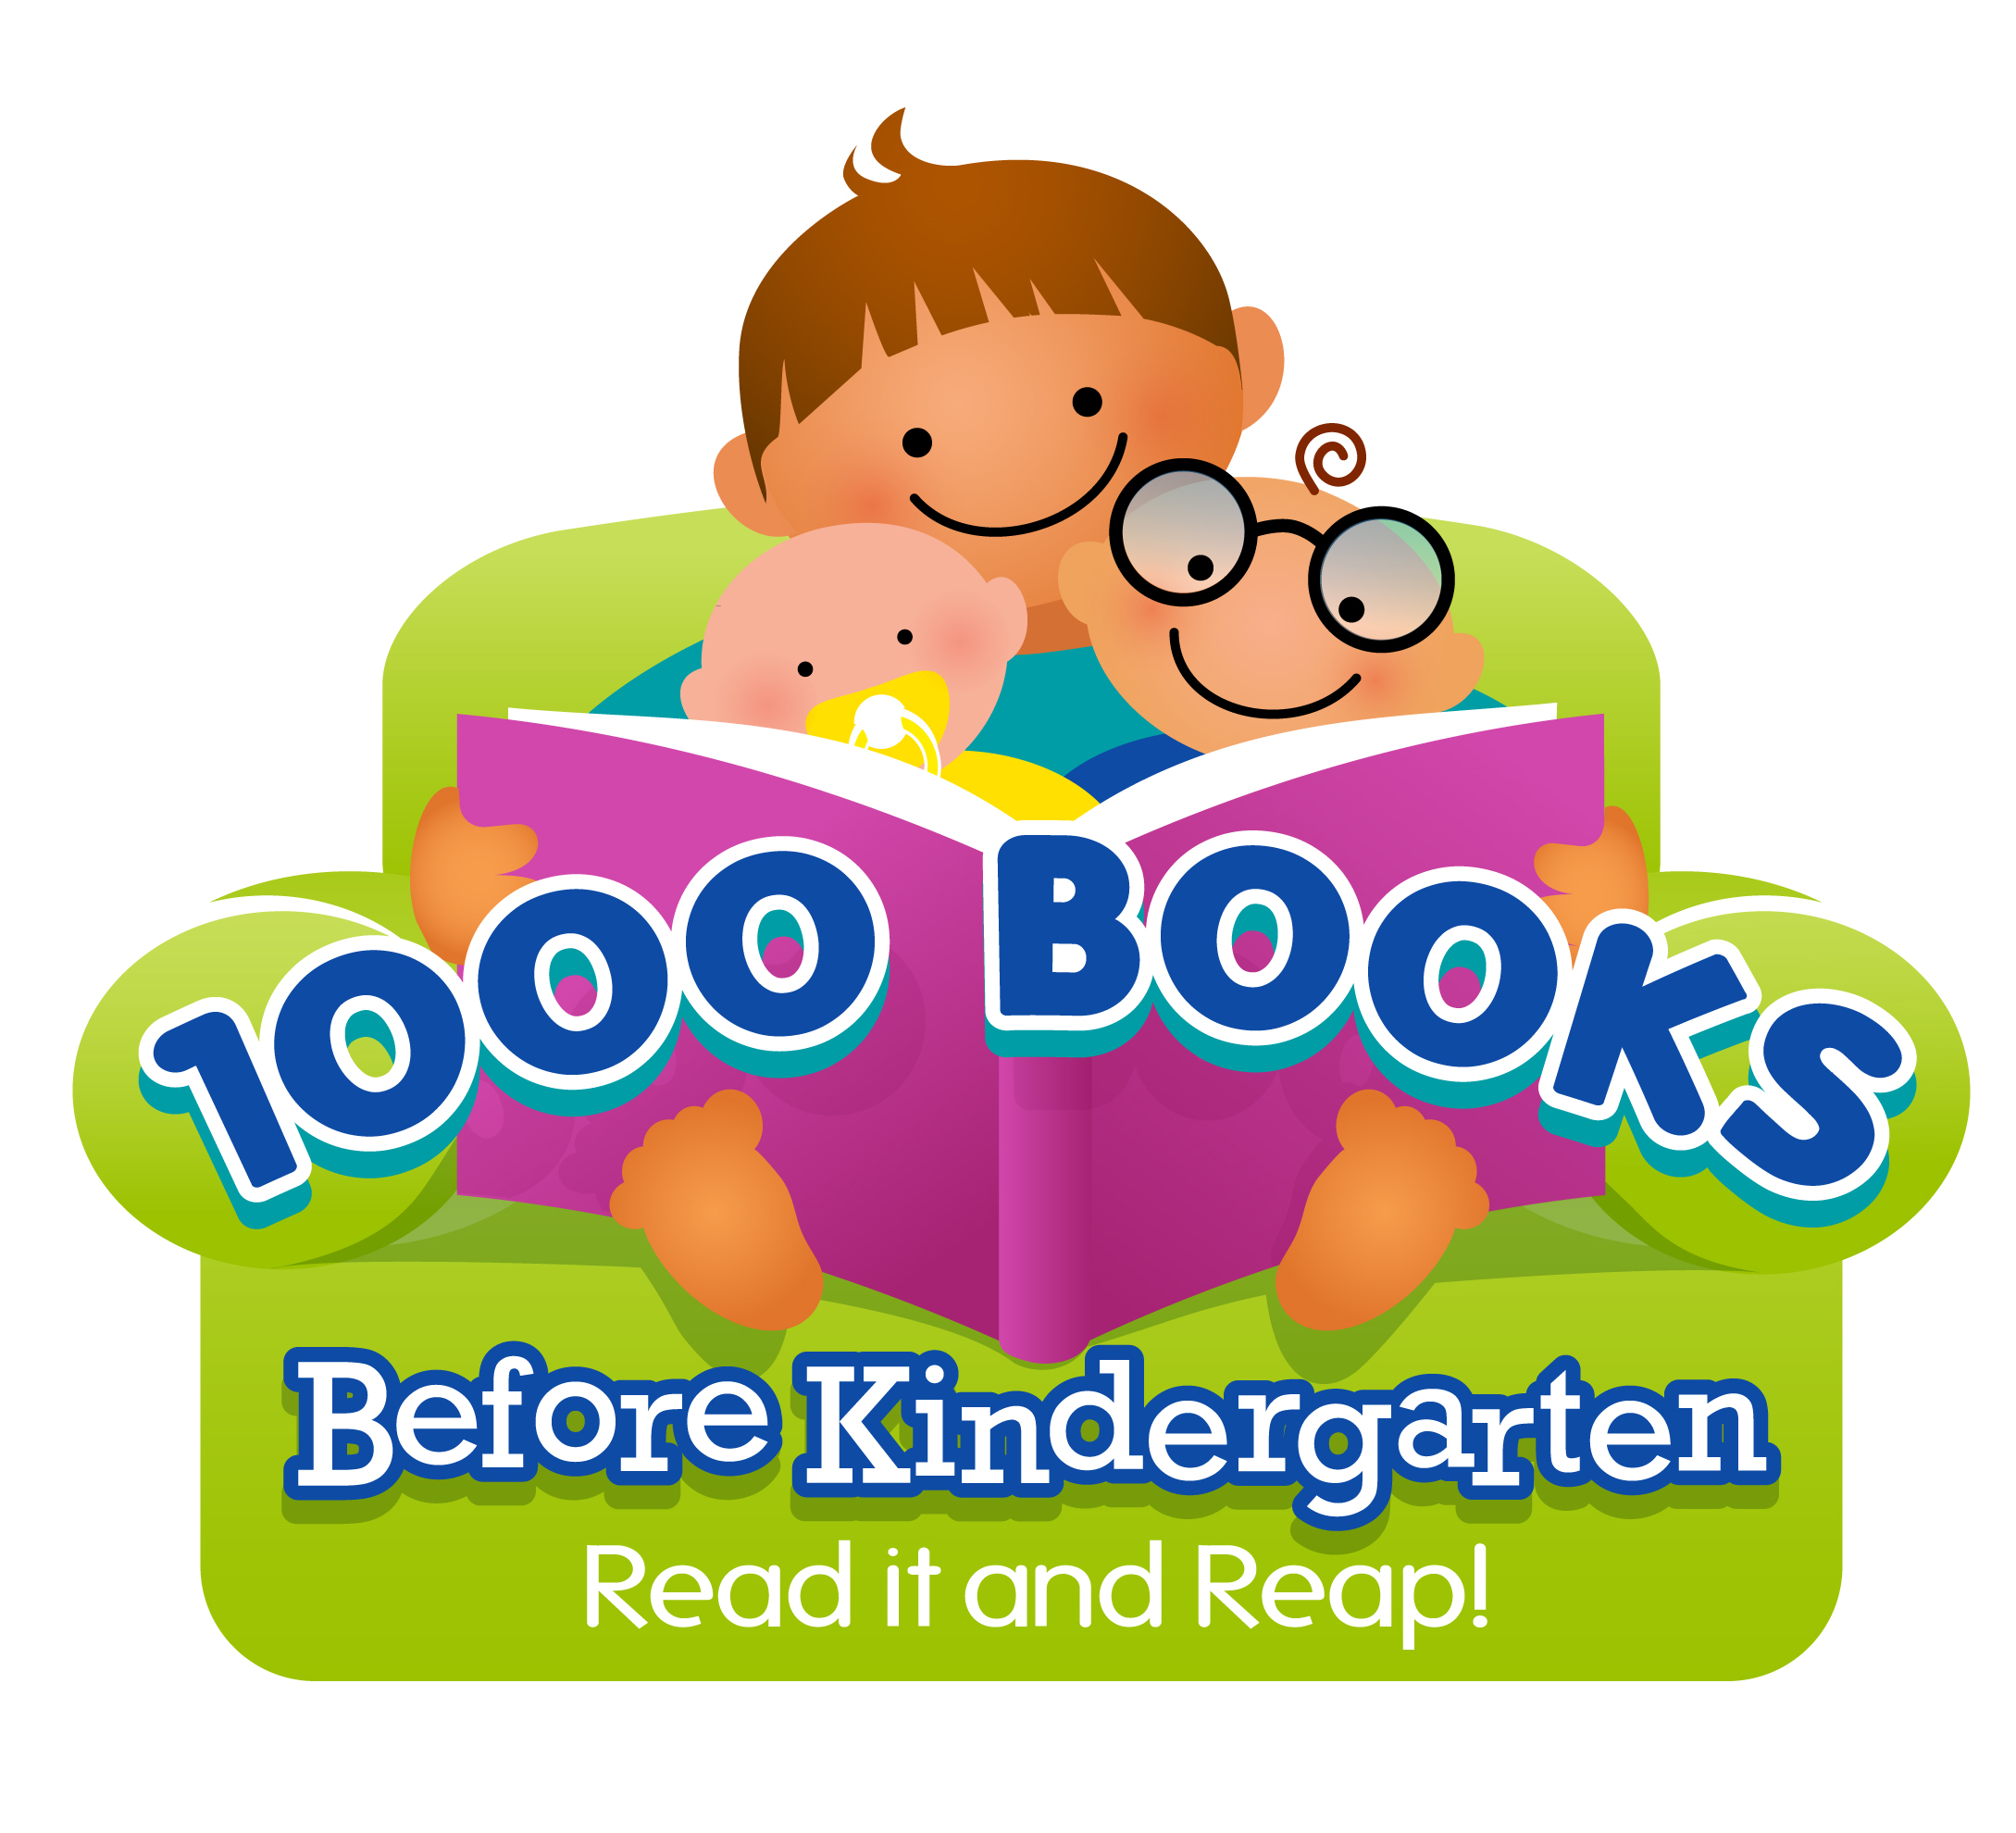 1,000 Books before kinder